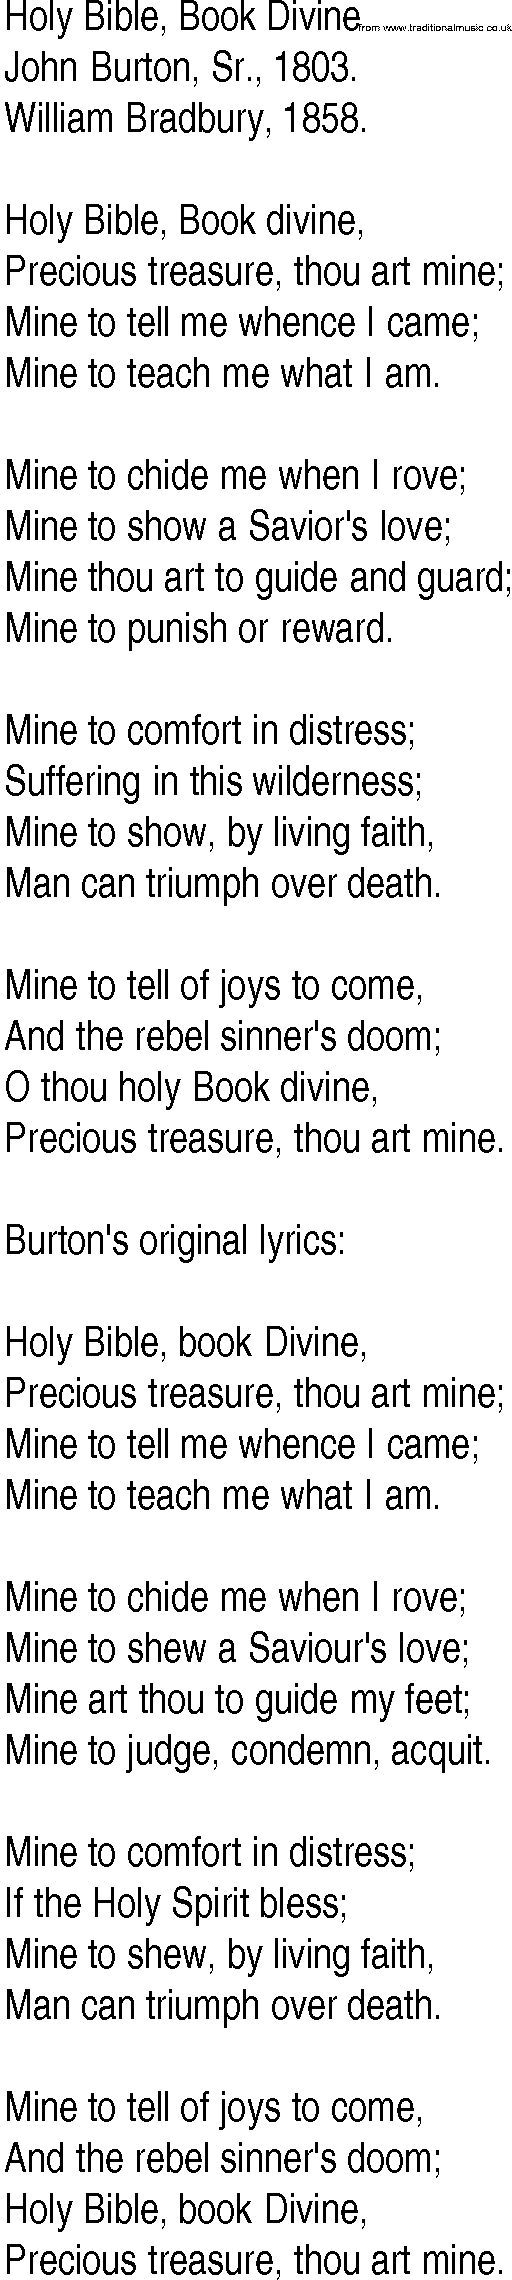 Hymn and Gospel Song: Holy Bible, Book Divine by John Burton Sr lyrics